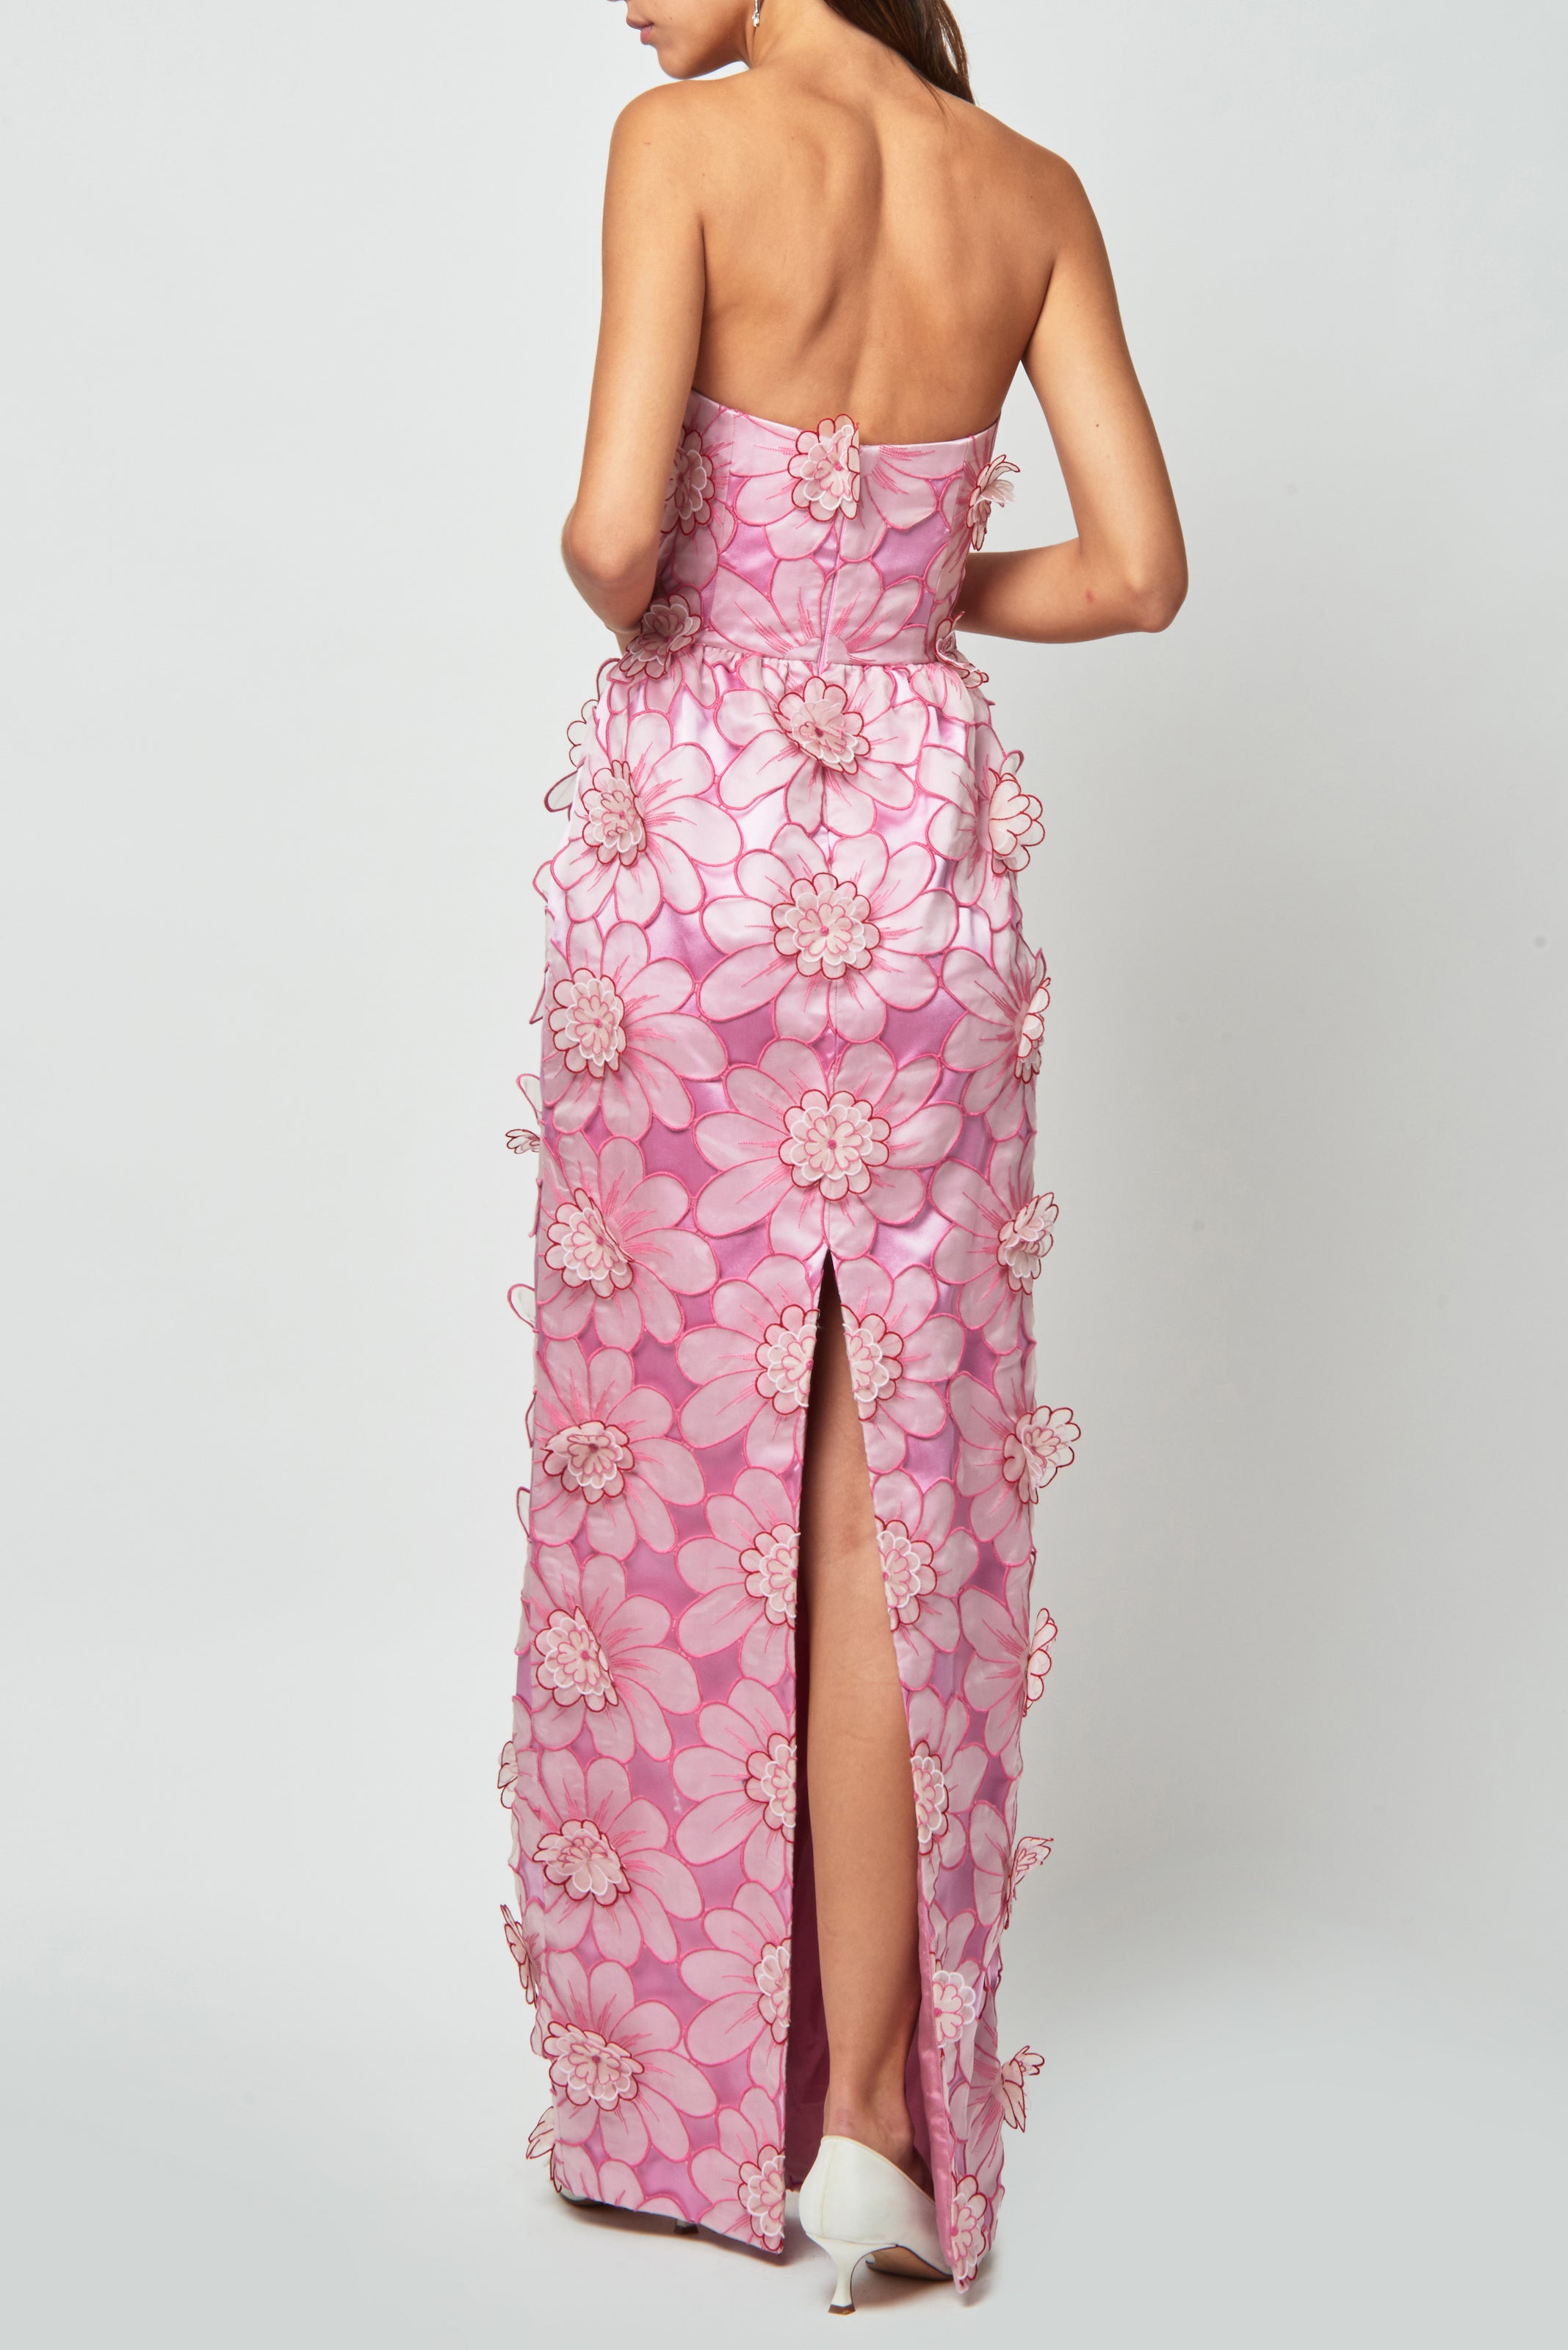 strapless floral dress